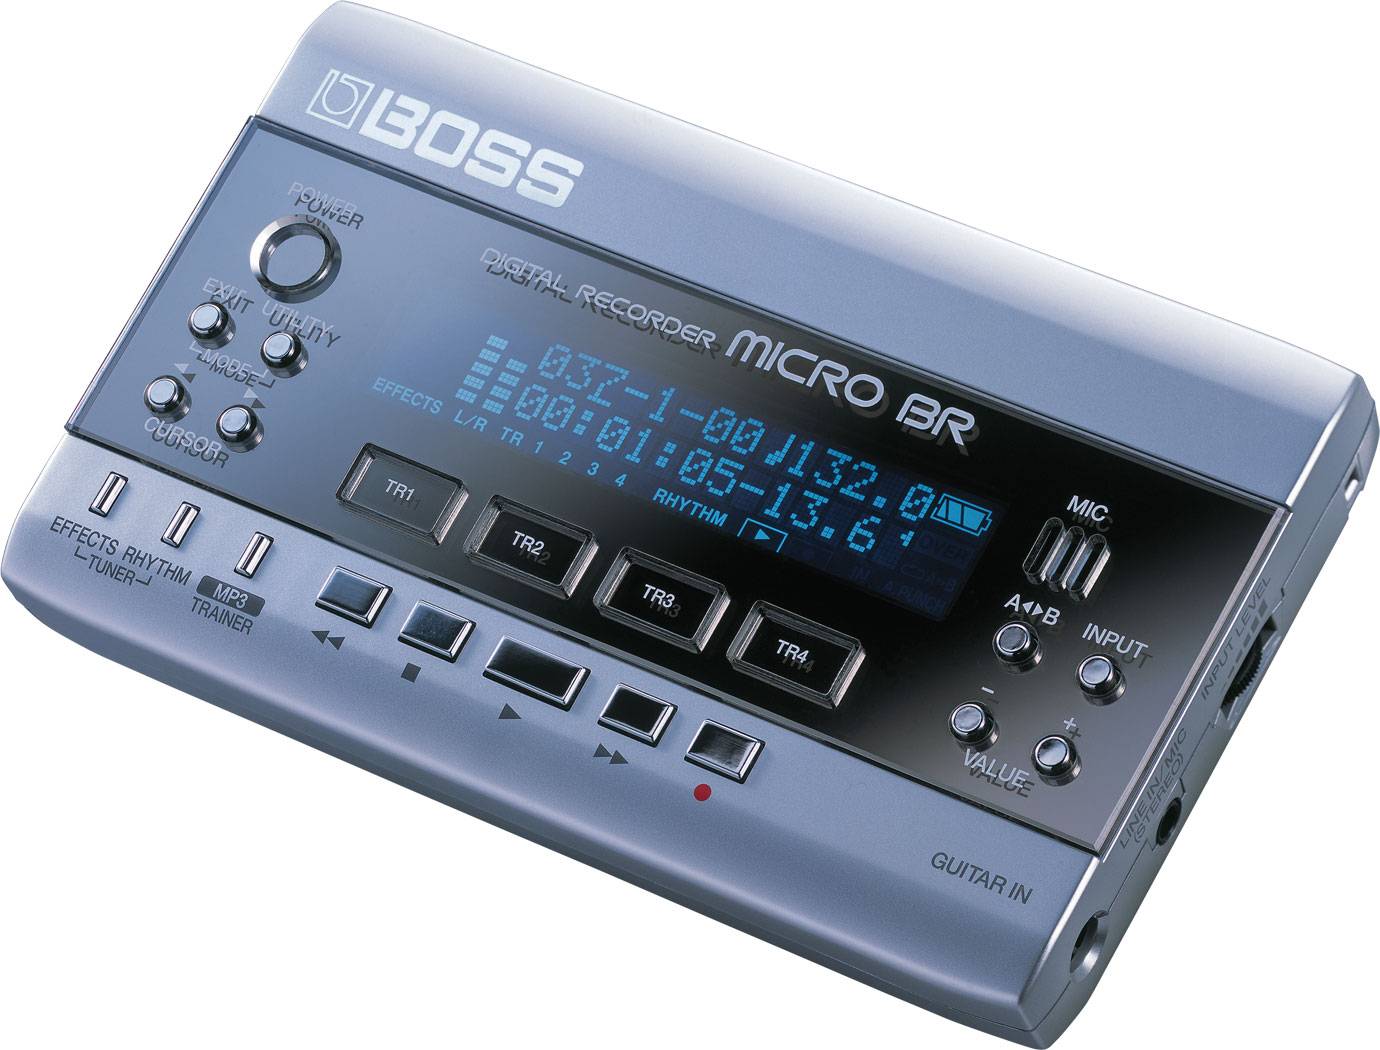 BOSS MICRO BR Digital Recorder